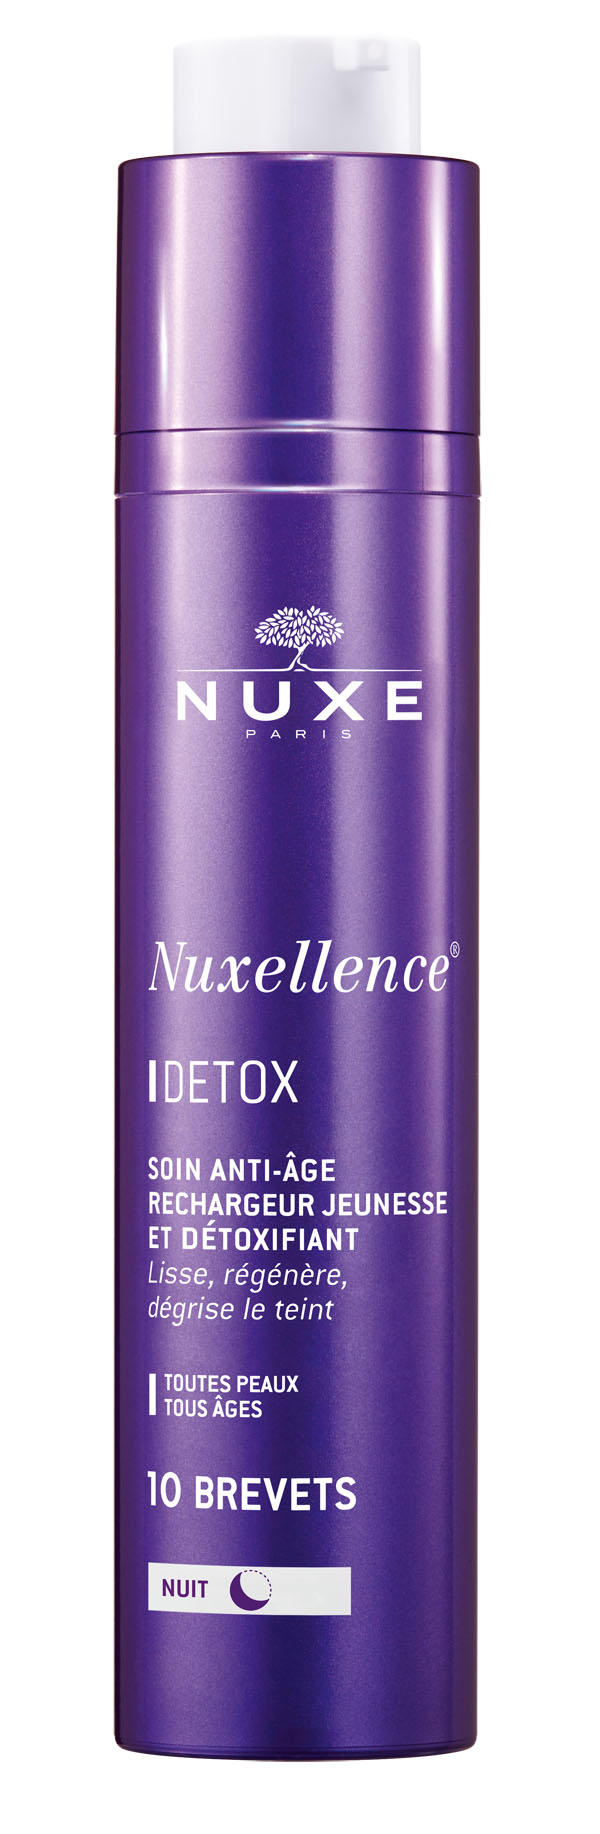 Nuxe Уход против старения Detox, 50 мл (Nuxe, Nuxellence)